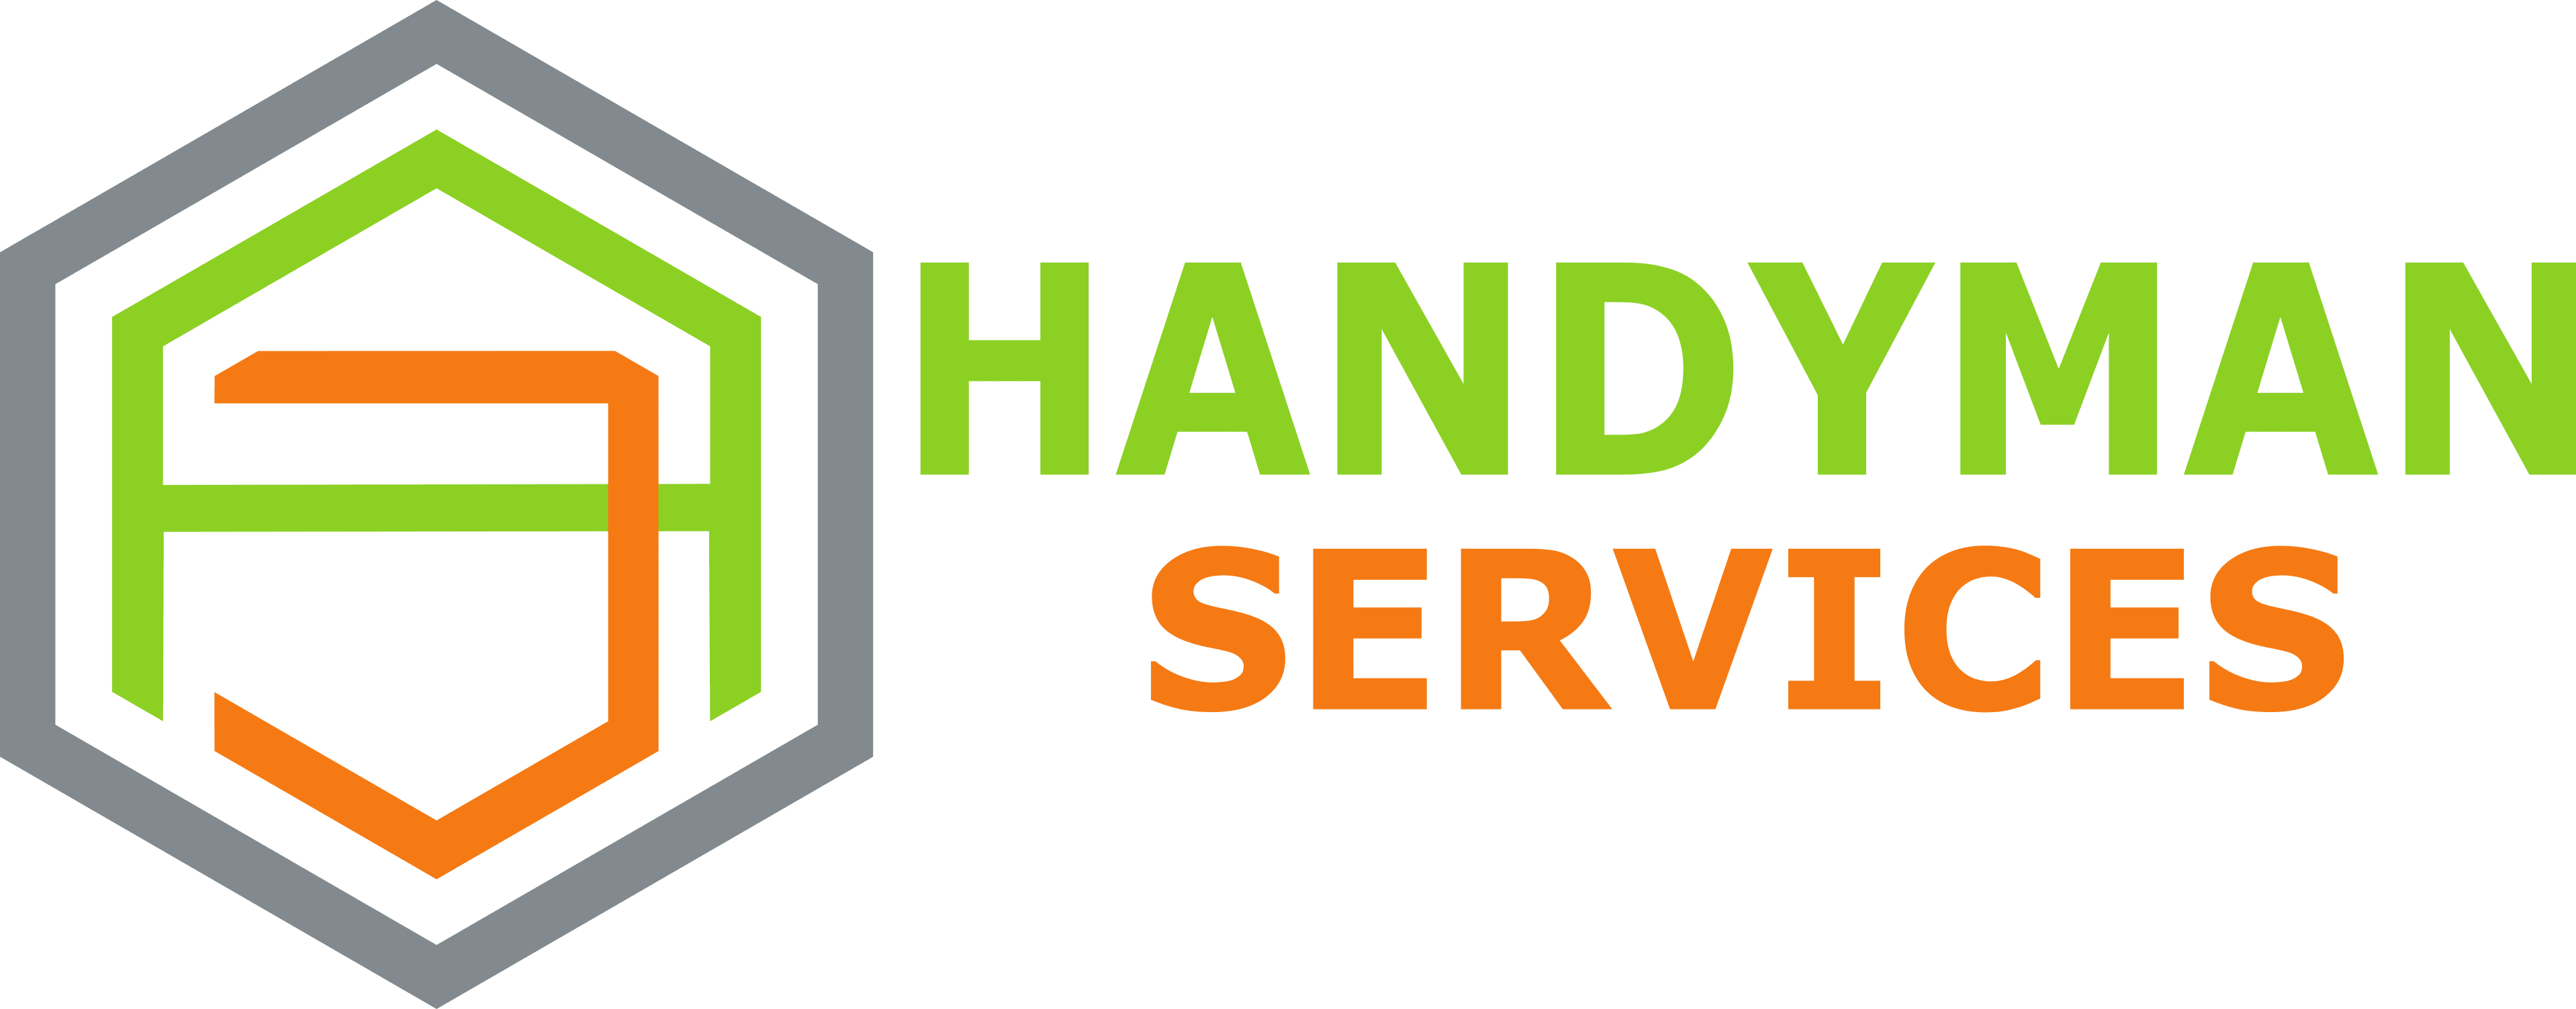 AJ Handyman Services